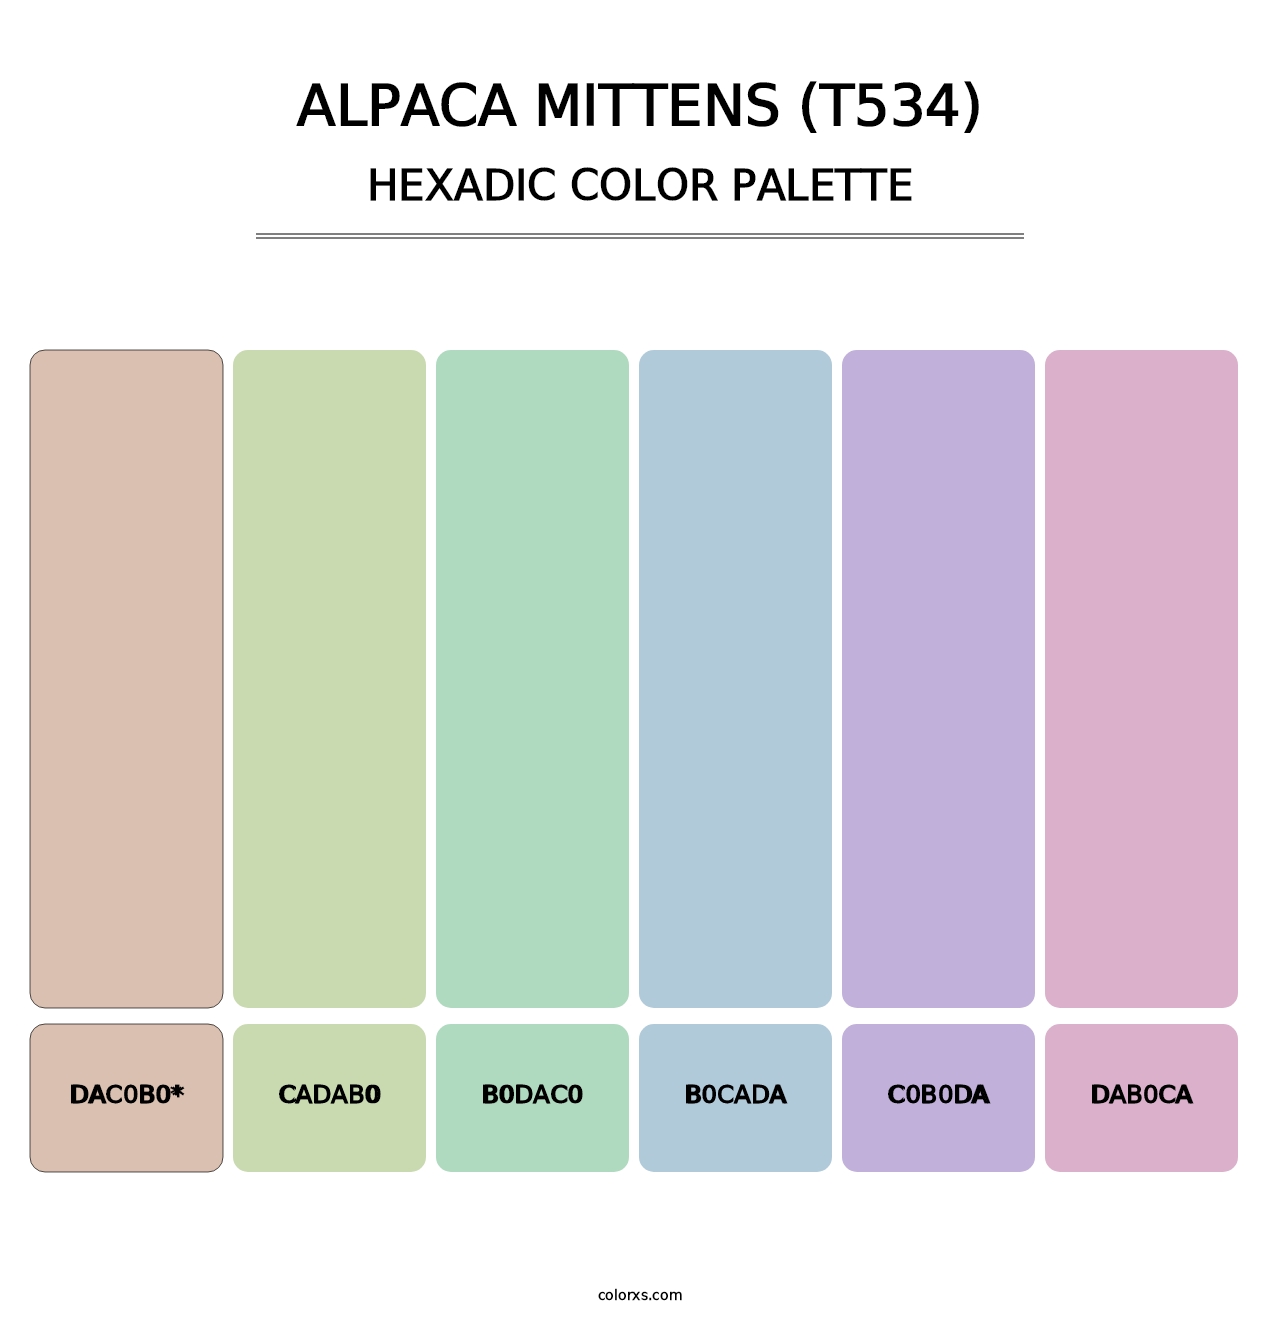 Alpaca Mittens (T534) - Hexadic Color Palette